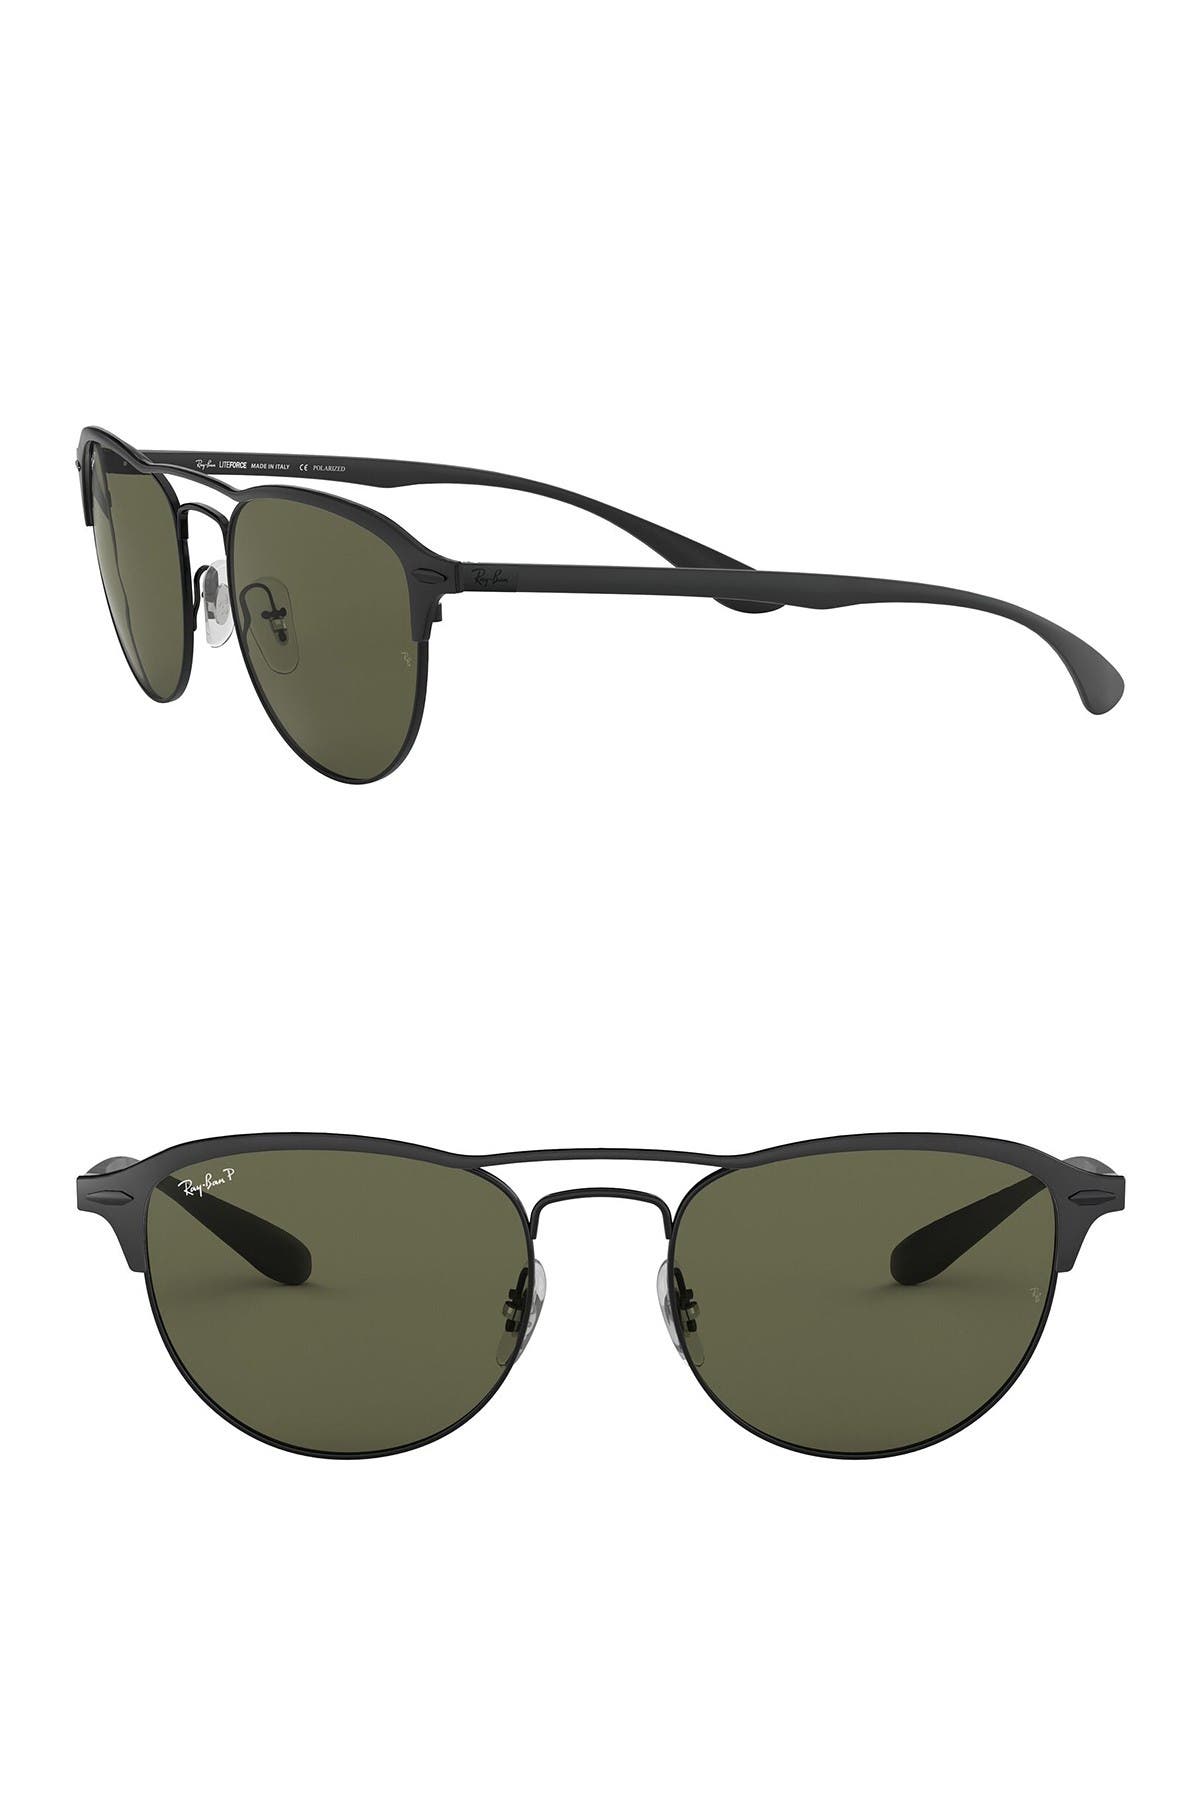 Ray Ban Phantos 54mm Square Polarized Sunglasses Nordstrom Rack